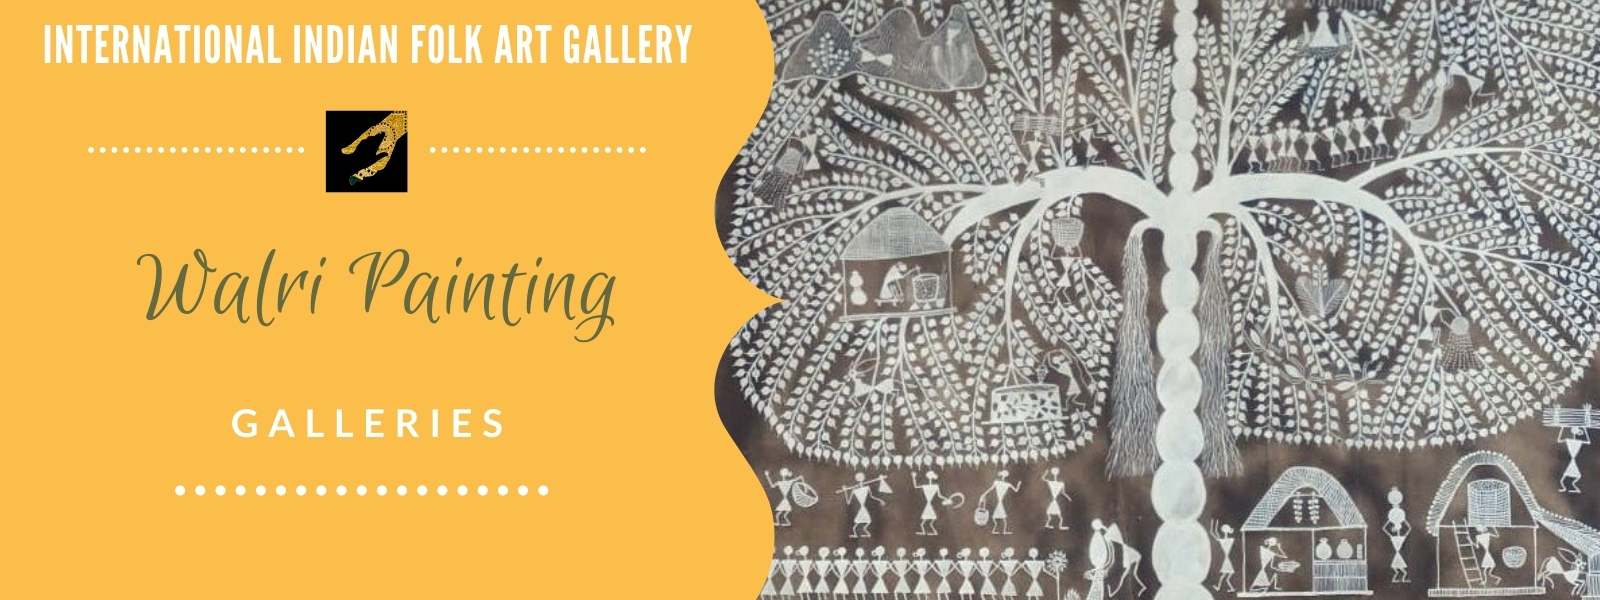 Warli Painting Indian Folk Art Gallery 04a